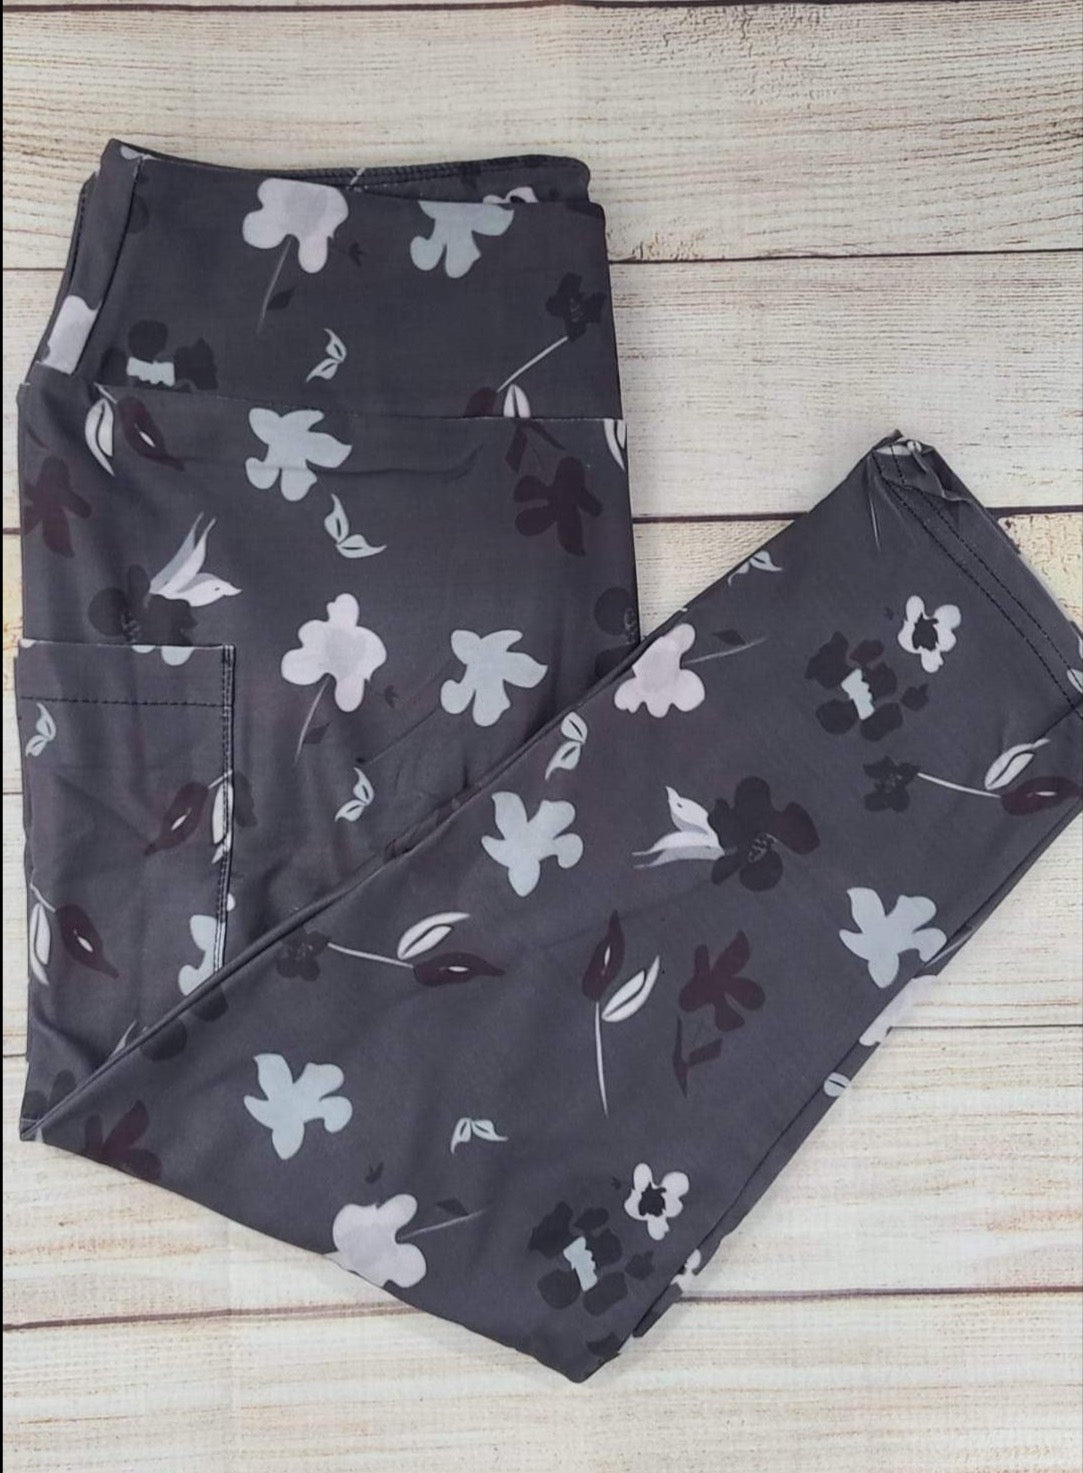 Negative Floral with pockets leggings/capris/shorts